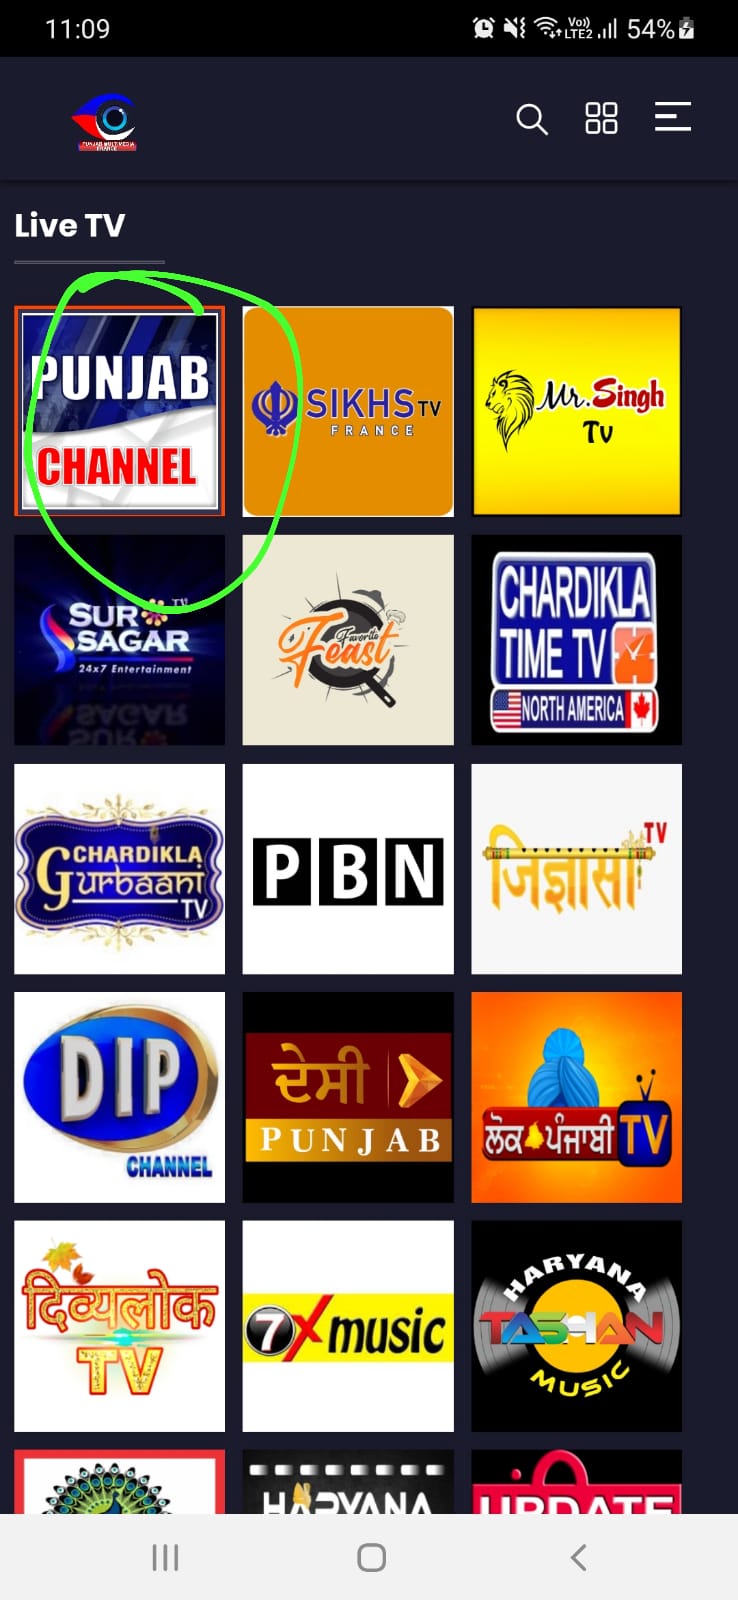 Live 24 x 7 TV Channels - OTT Platform